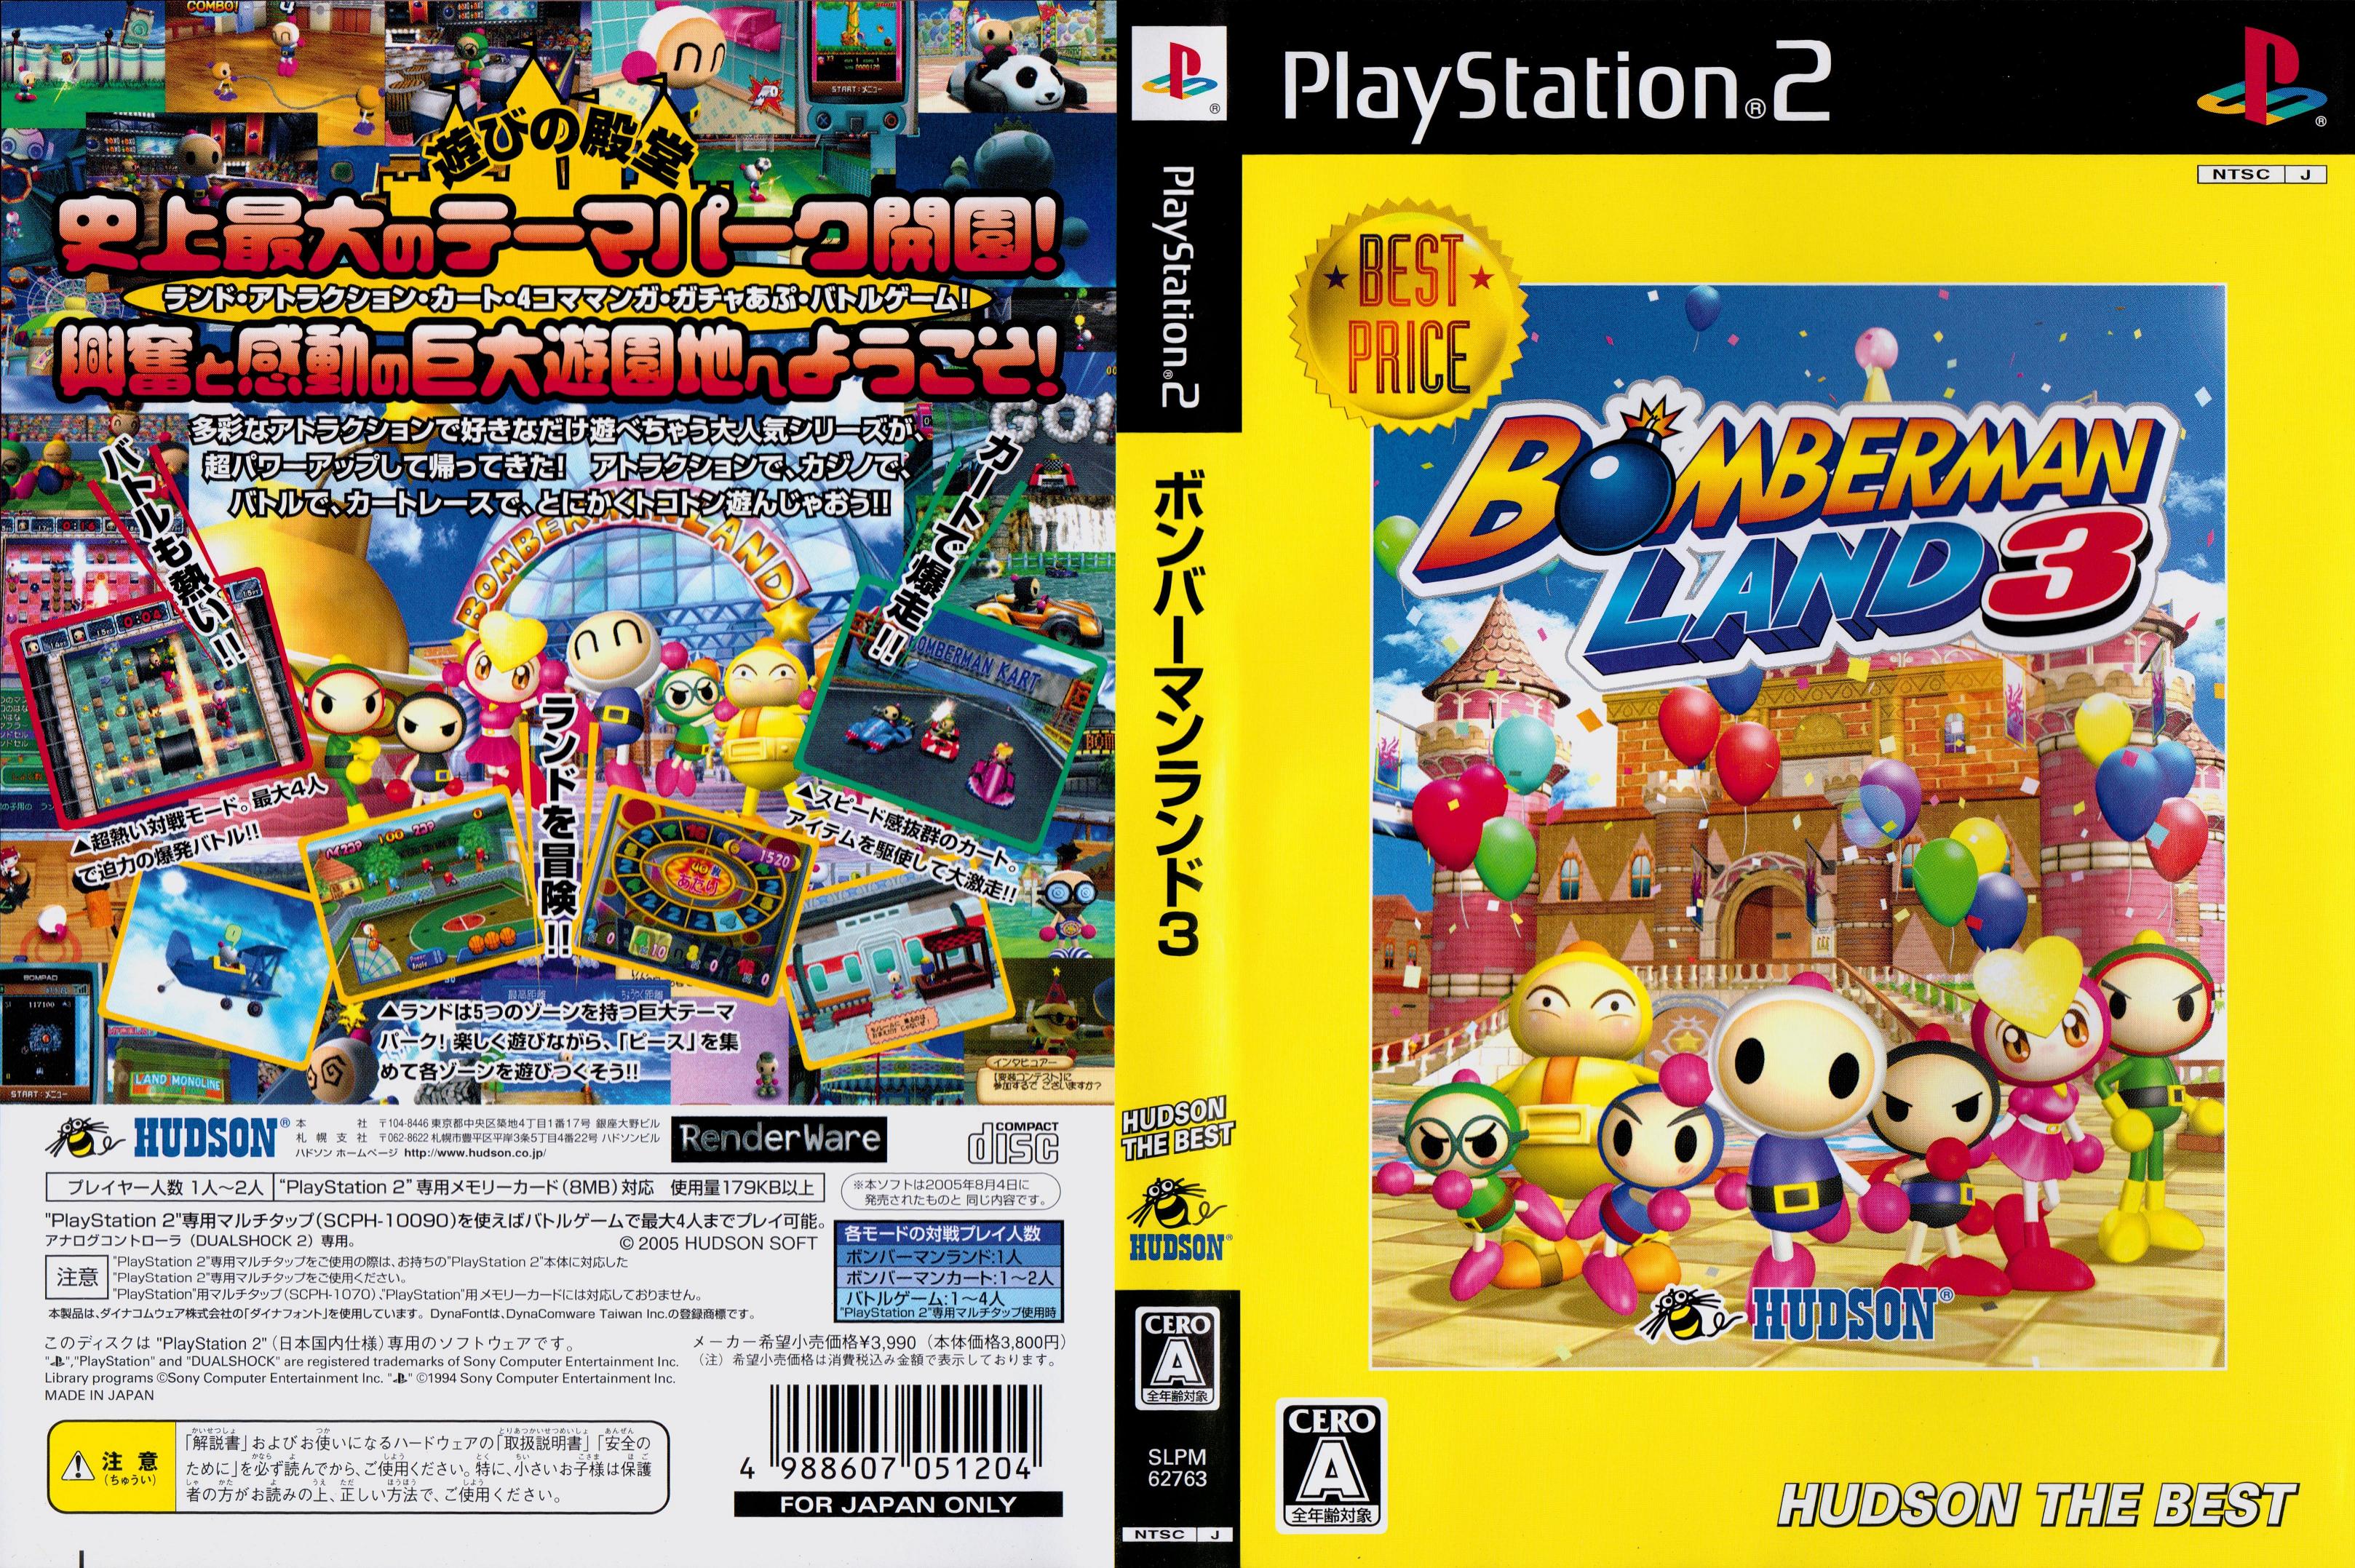 PS2 software Bomberman Land 3, Game